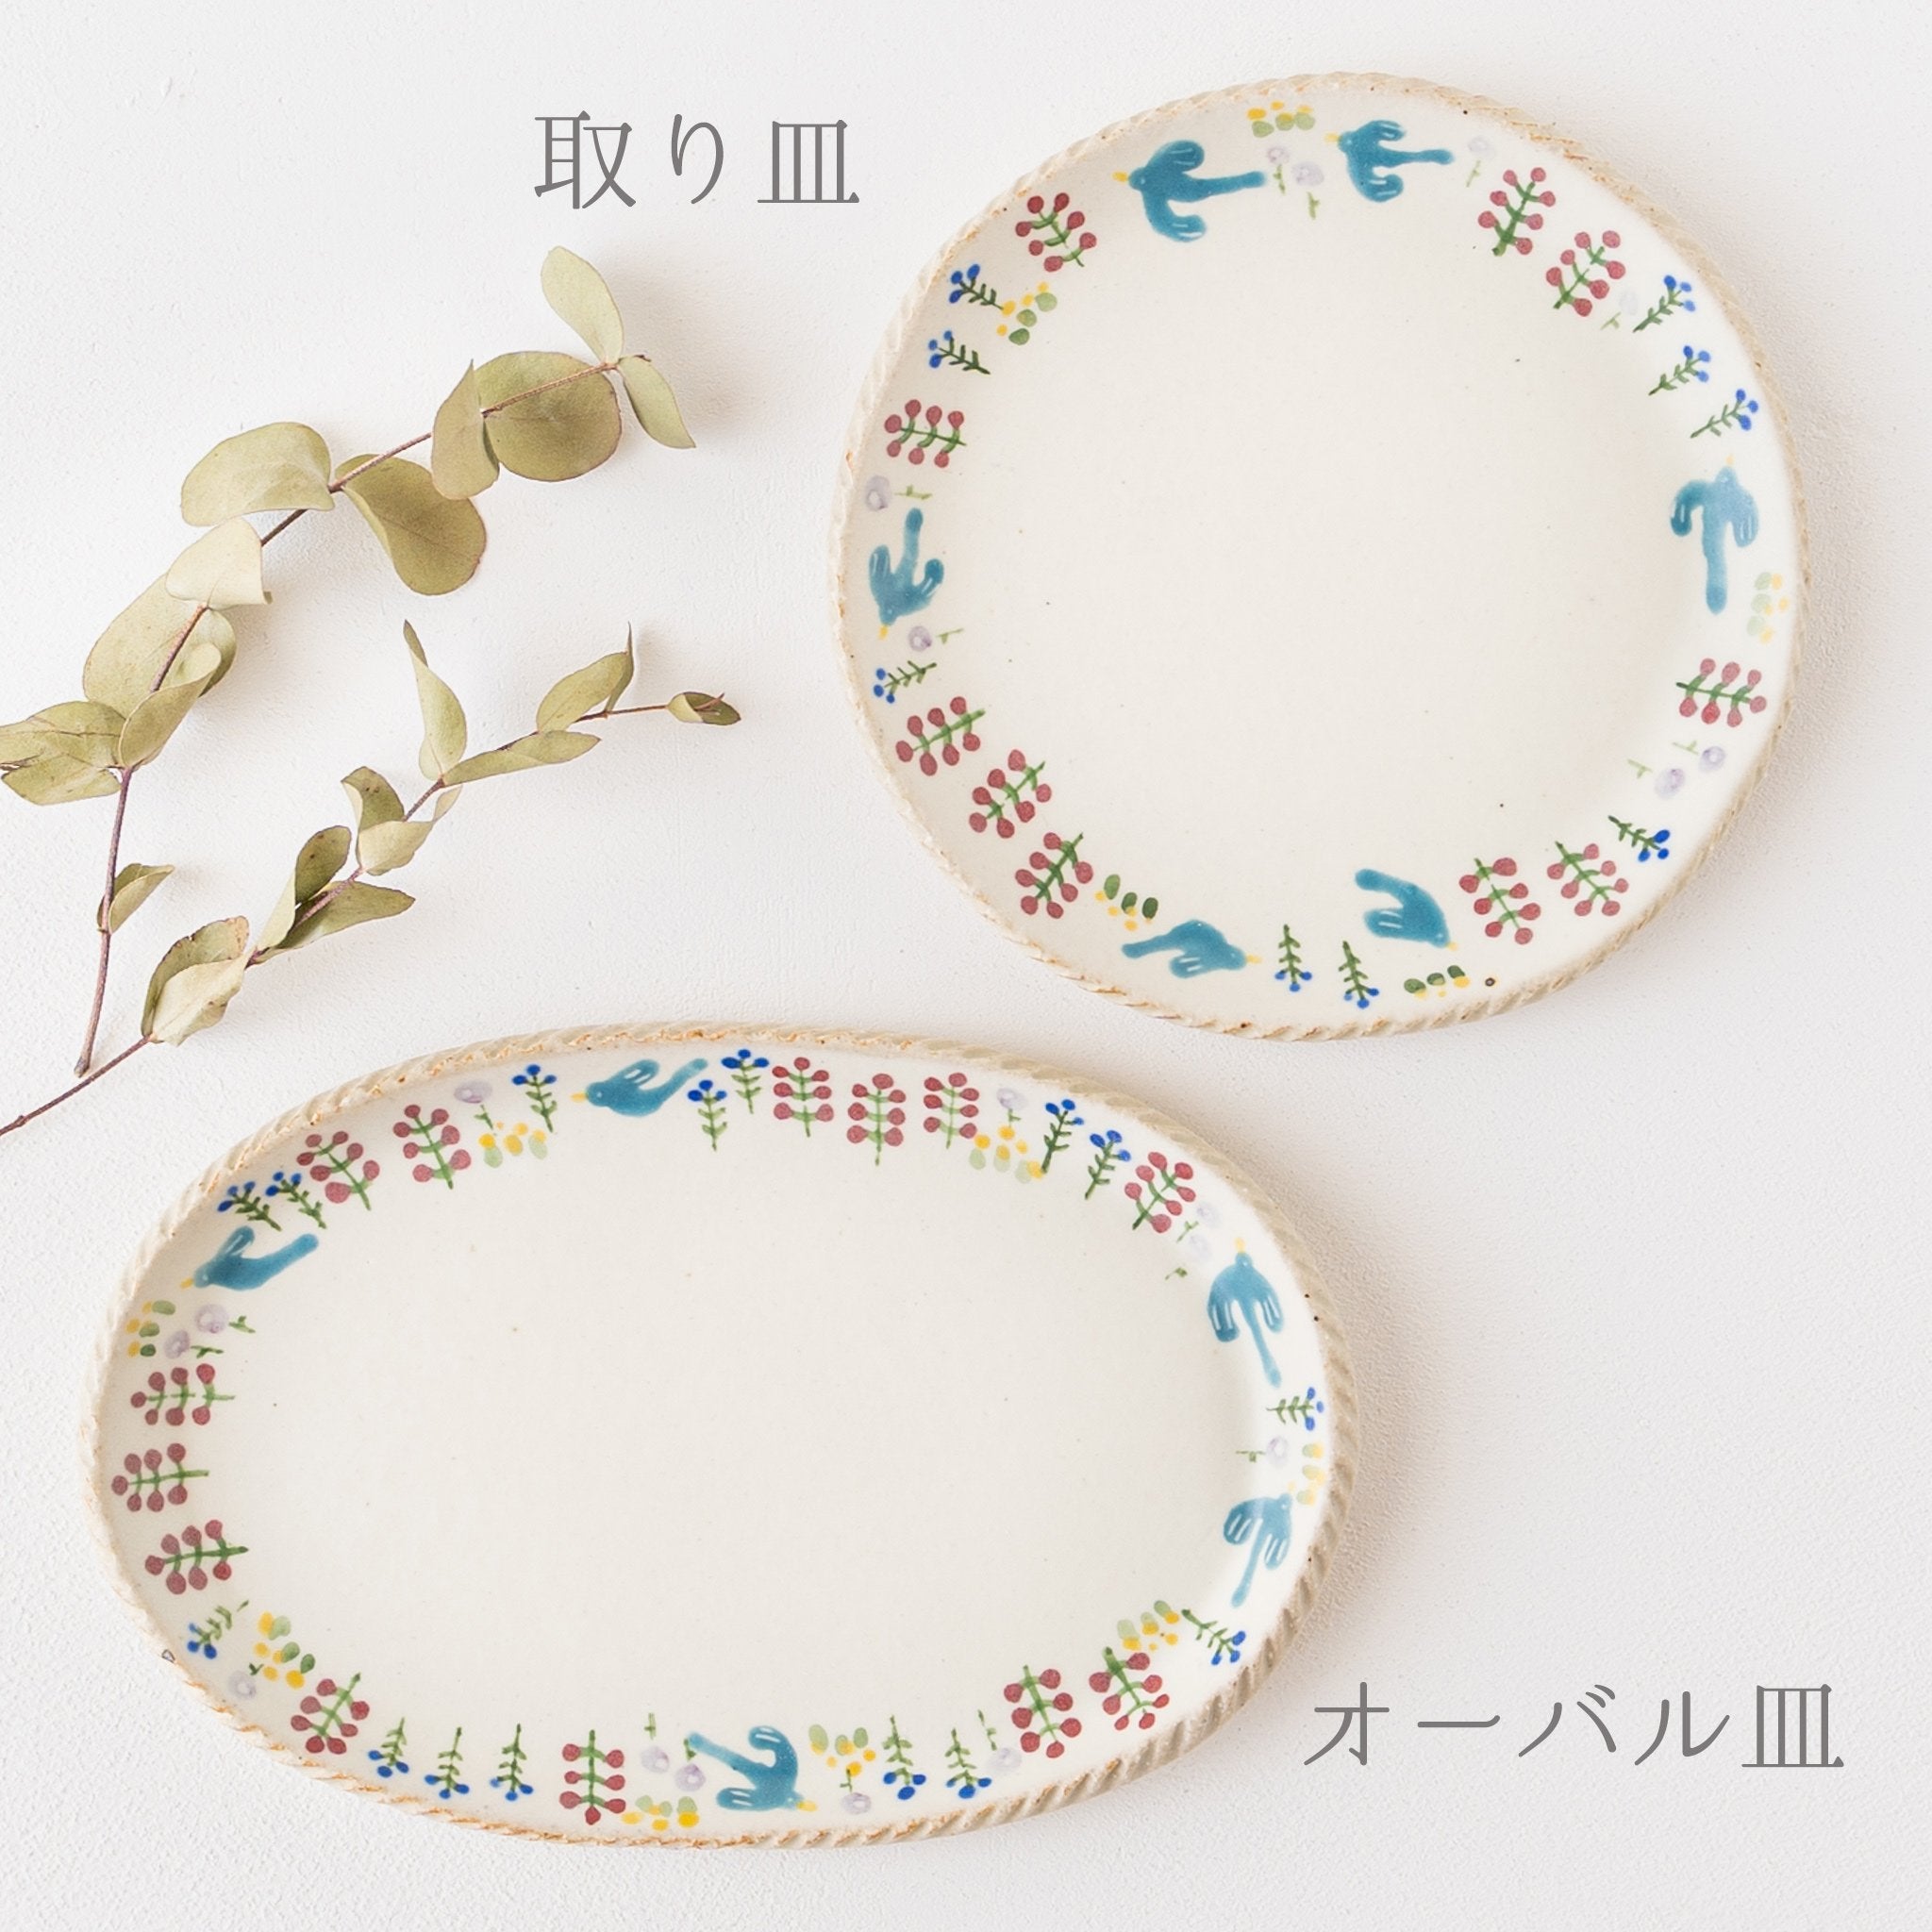 Medium plate of flowers and birds (Akane Suzuki)